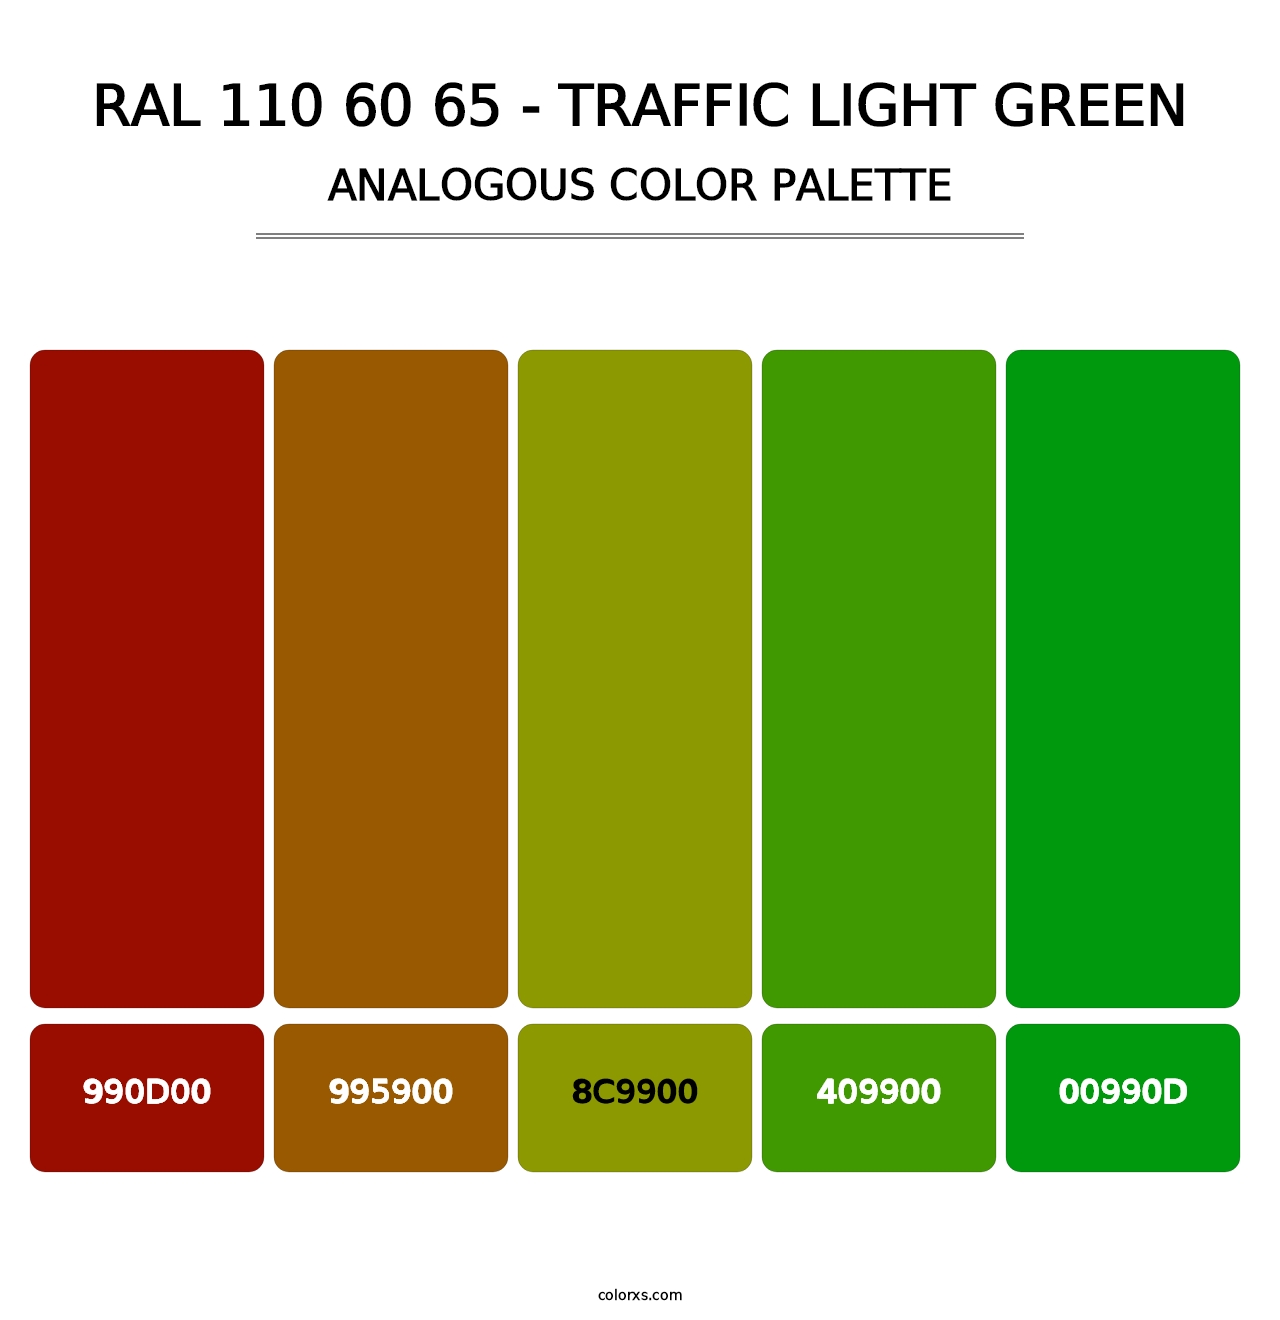 RAL 110 60 65 - Traffic Light Green - Analogous Color Palette